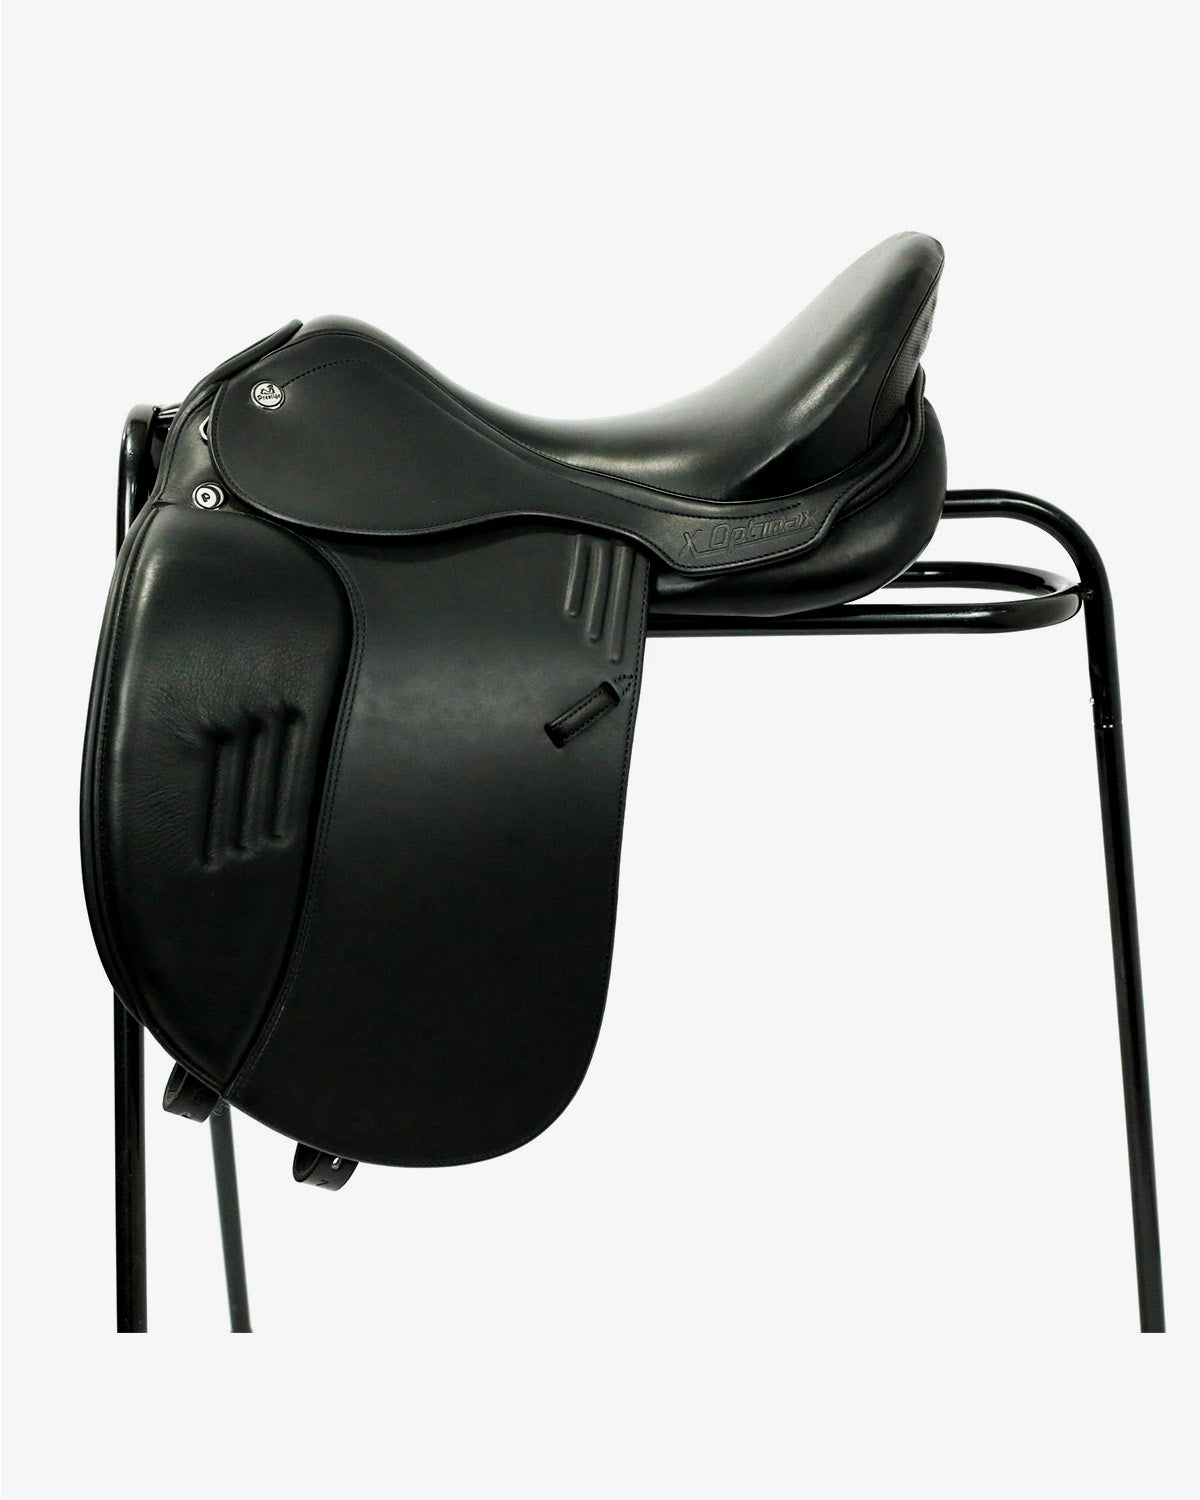 X-Optimax Dressage Saddle